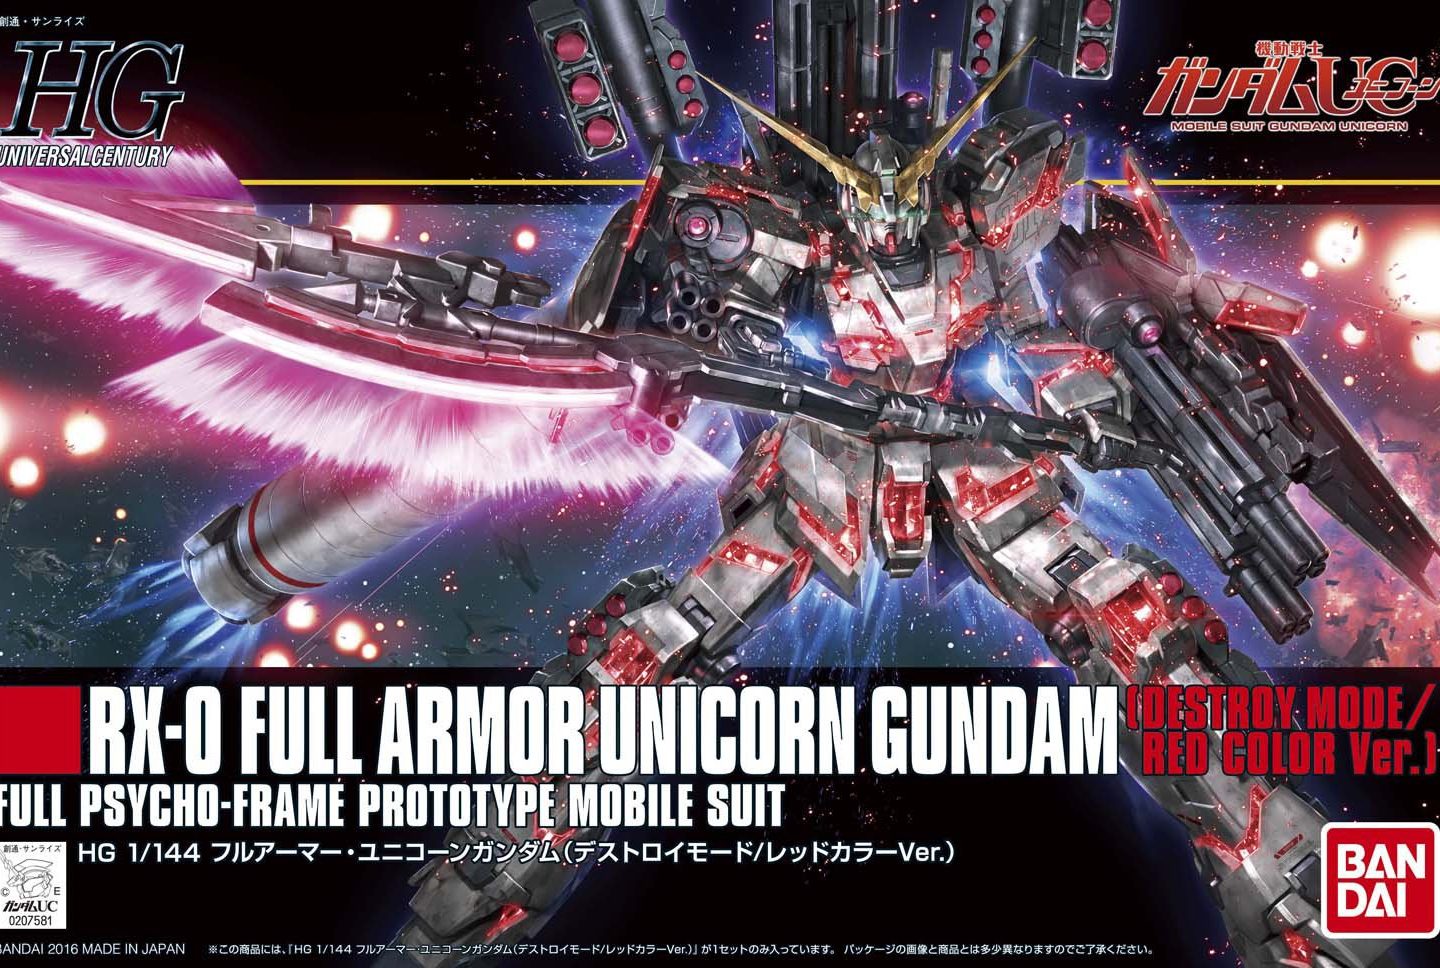 Photo Gallery: HG 1/144 Full Armor Unicorn Gundam (Destroy Mode/Red Color Ver.)